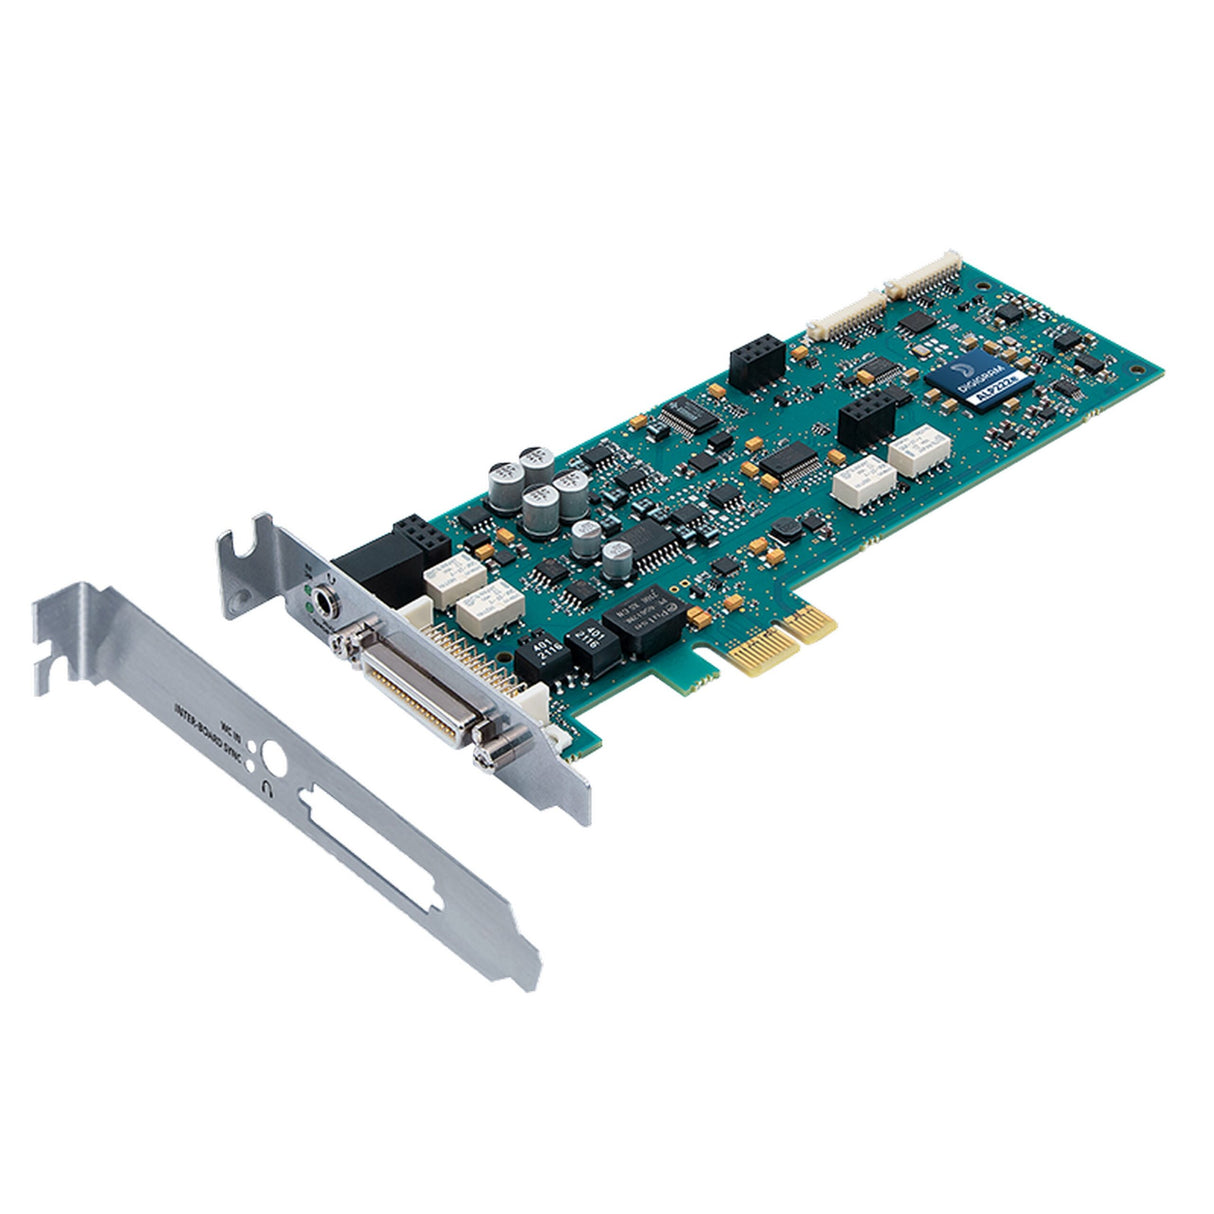 Digigram ALP222e Low Profile PCIe Card with Stereo Analog I/O